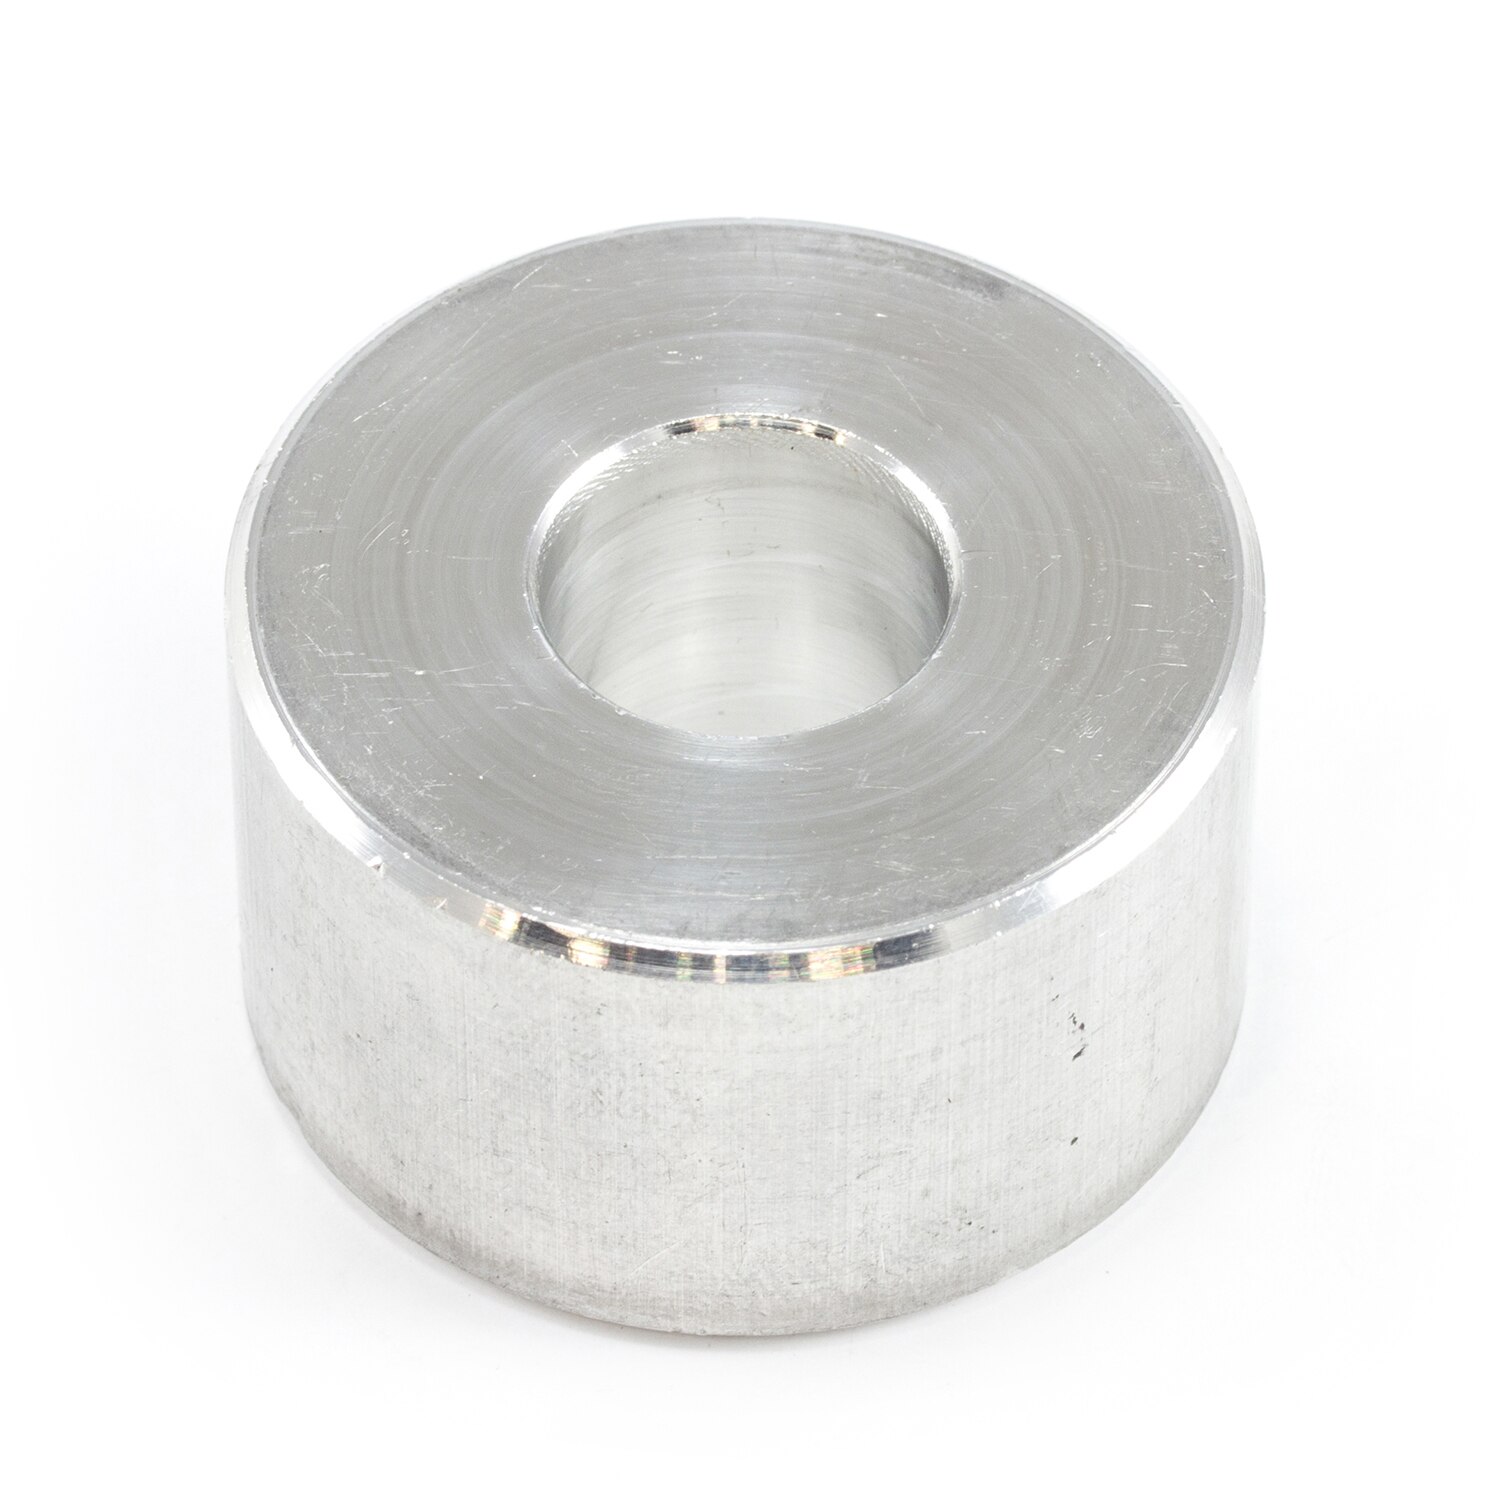 Aluminum Washer / Spacer 1.75 Diameter x 1 Thick 10-pk